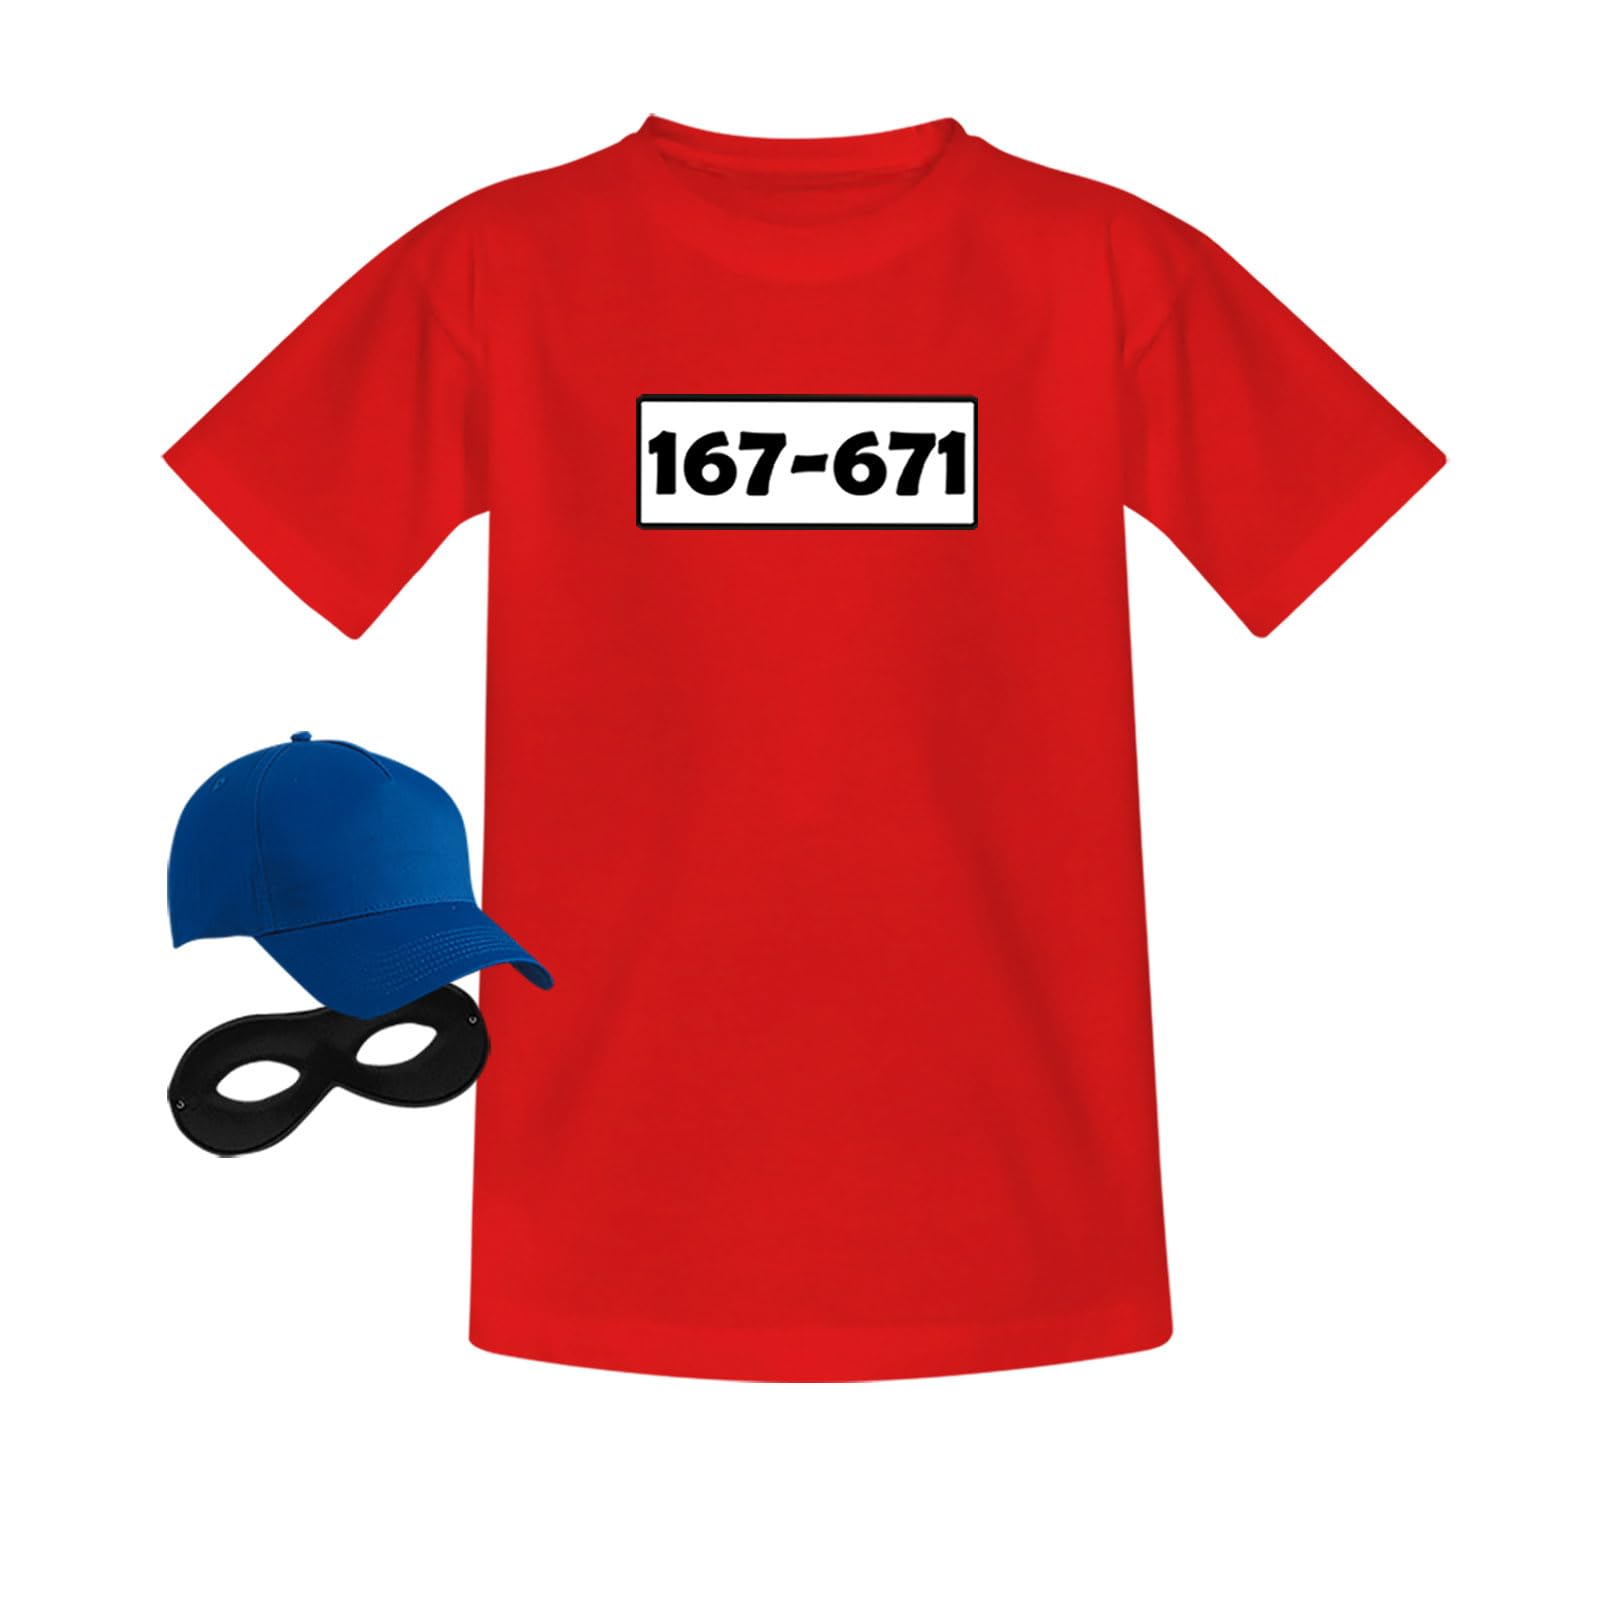 Jimmys Textilfactory T-Shirt Panzerknacker Karneval Kostüm Kids Set Wunschnummer 98-164 Kinder Verkleidung Fasching Outfit Rosenmontag JGA, Größe:152/164, Set: klassik, Logo: Standard-Nr